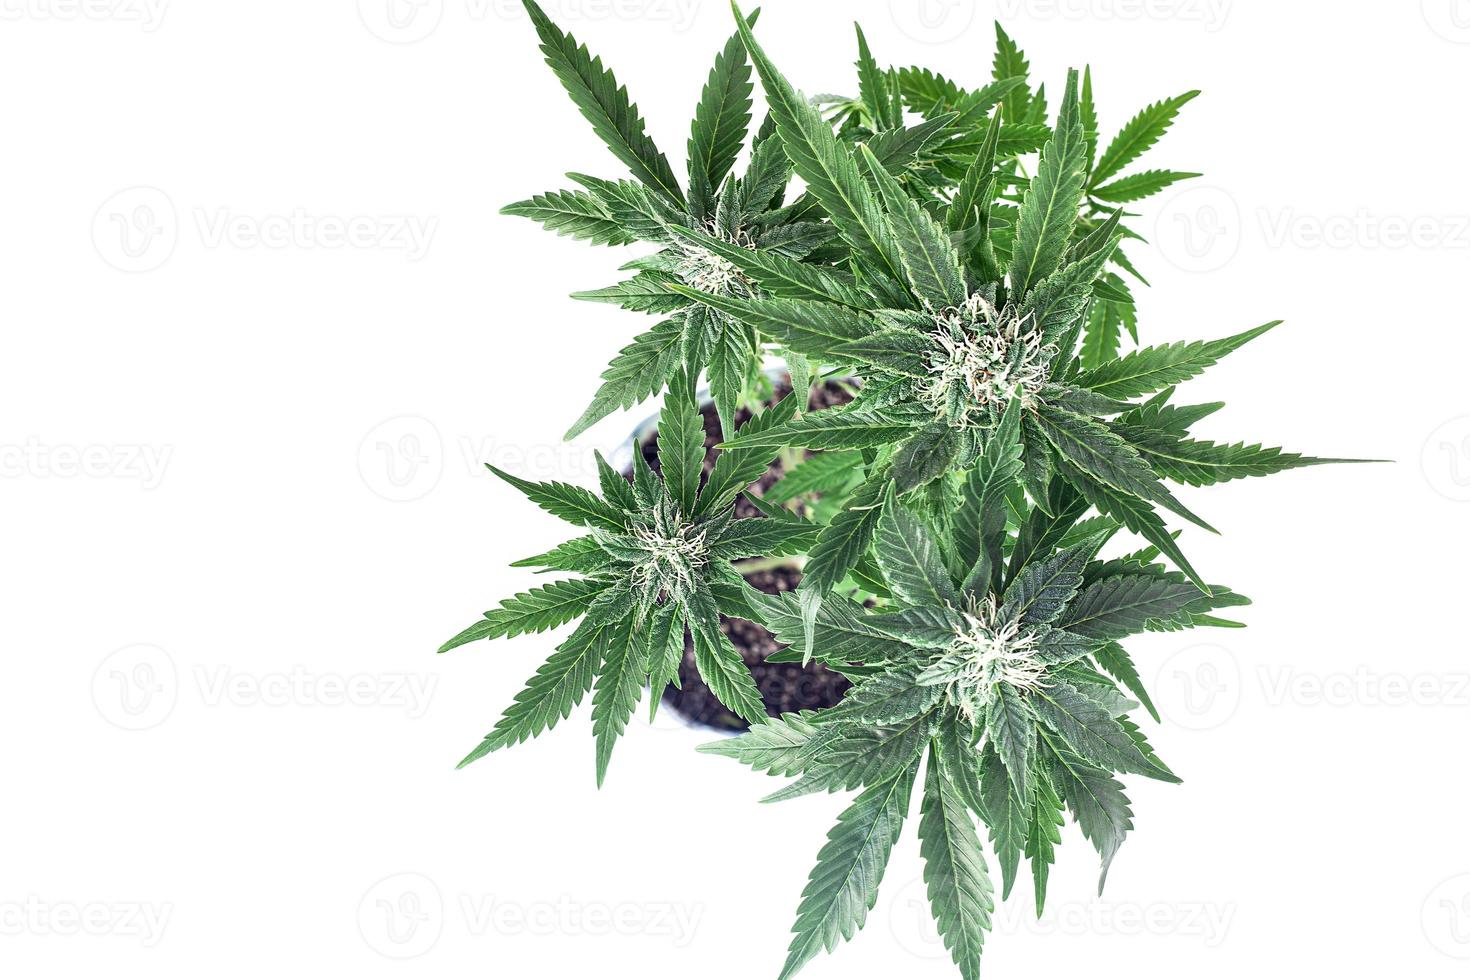 arbusto de cannabis florido em fundo branco foto